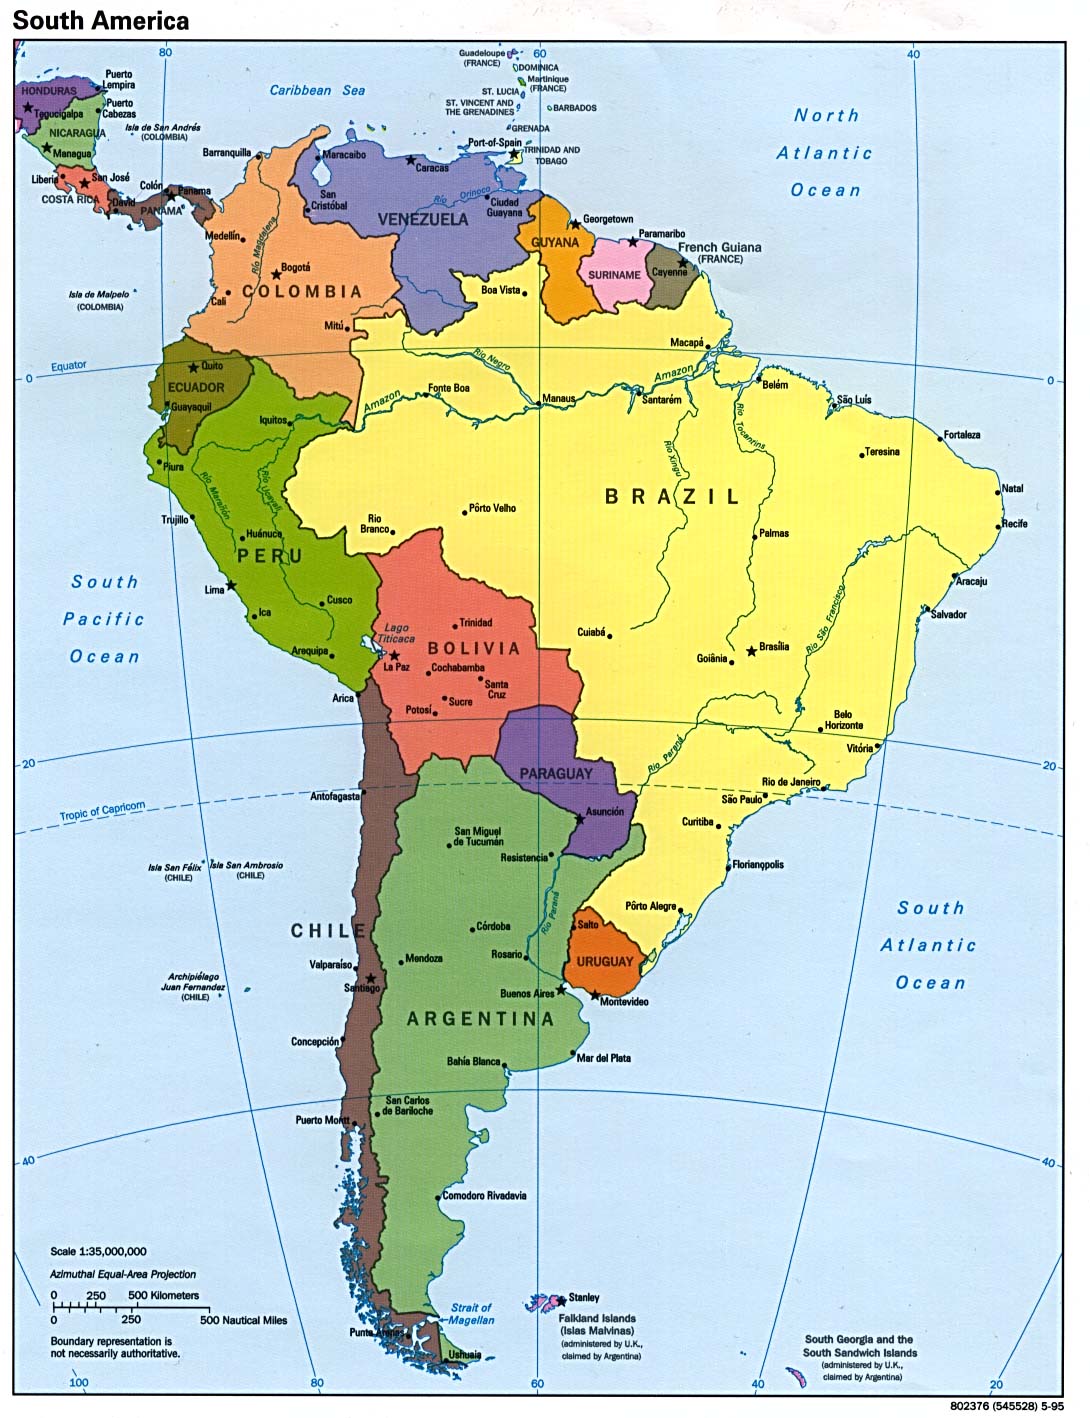 Mapa Completo De Sur America